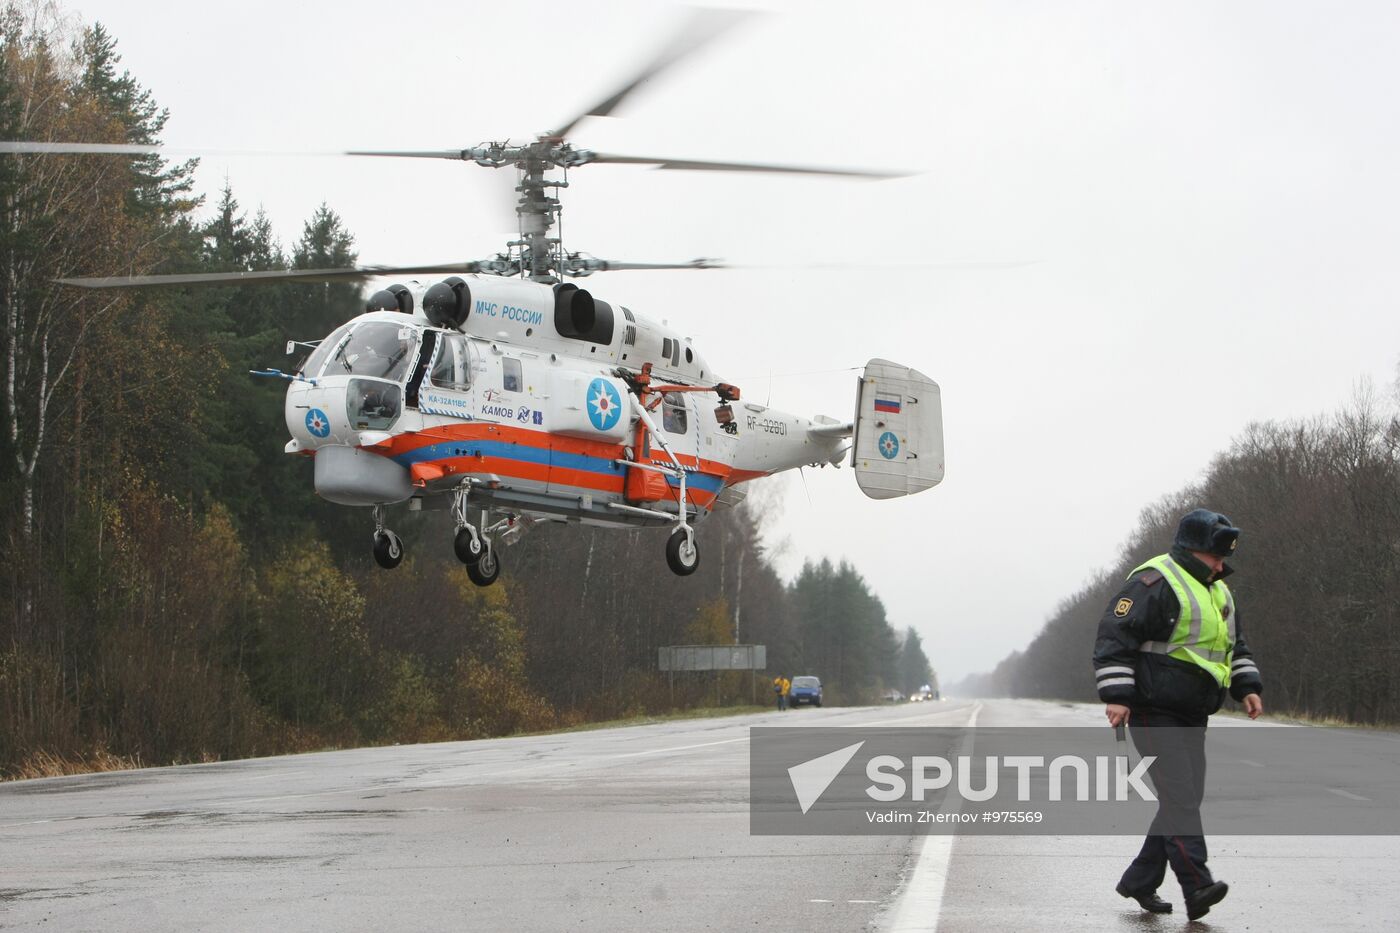 MES training with air-rescue equipment in Leningrad region